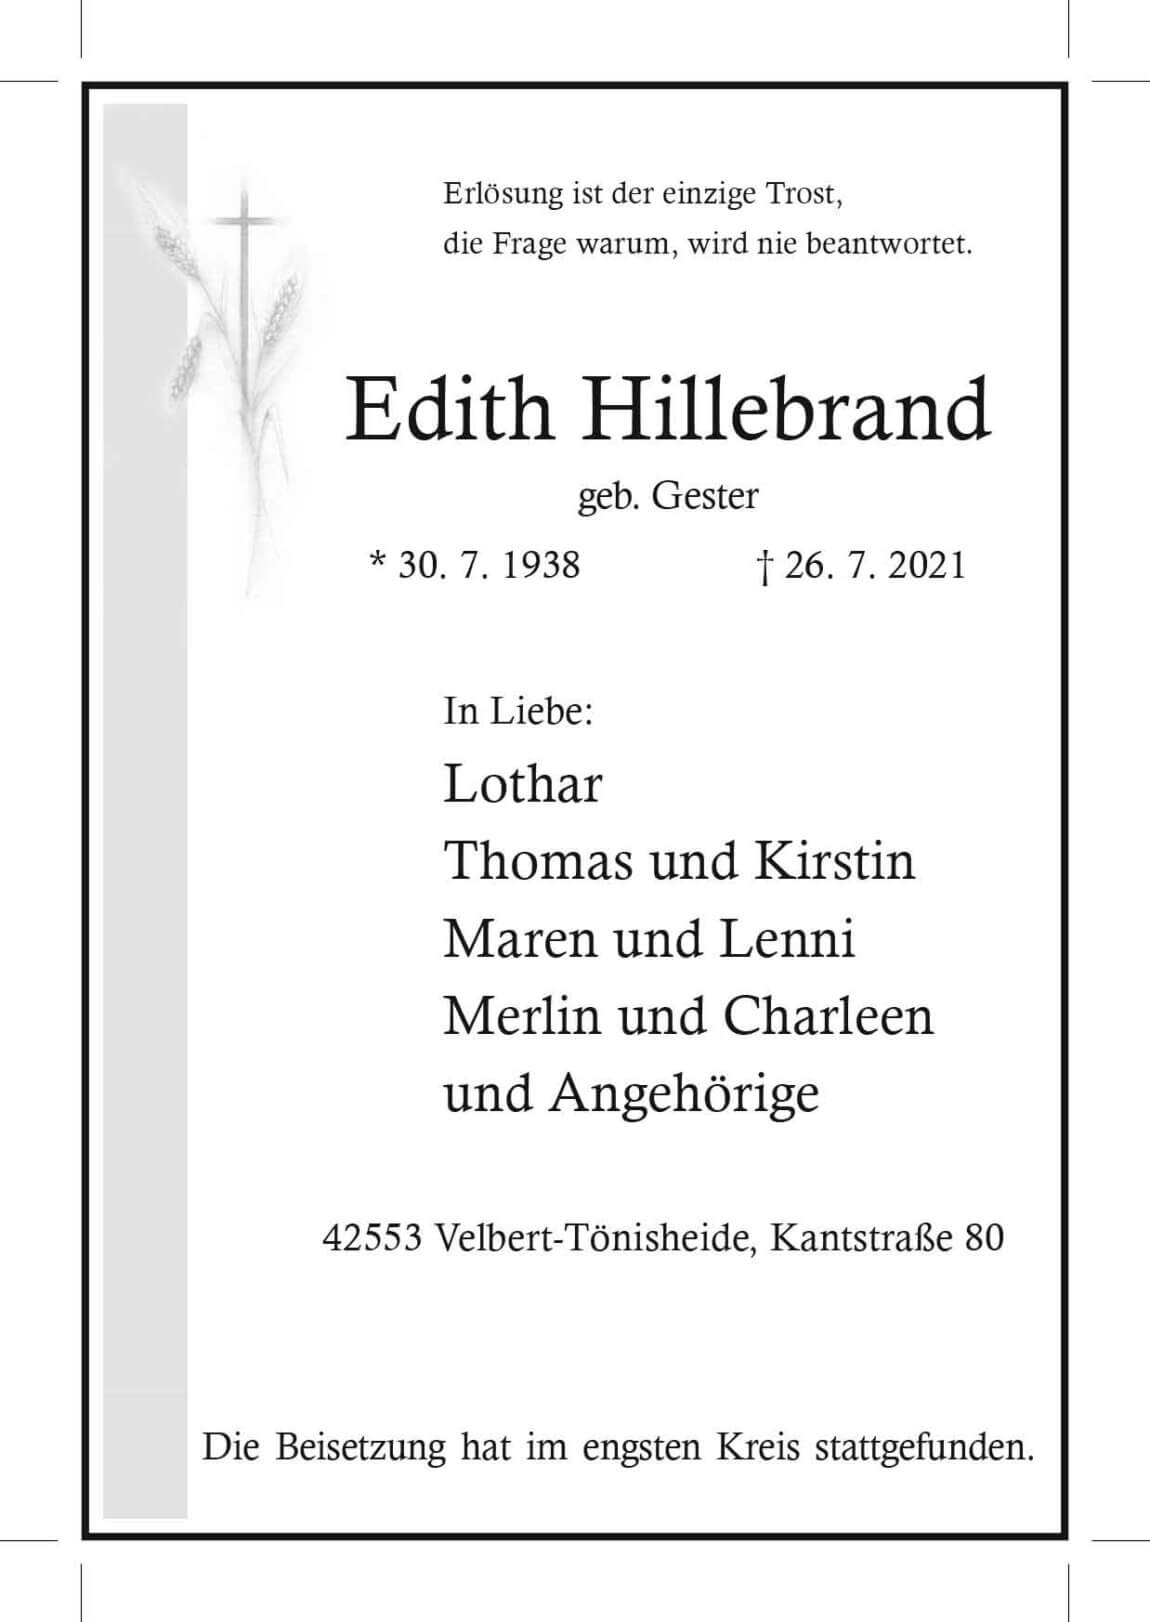 07.08.2021_Hillebrand-Edith.jpg